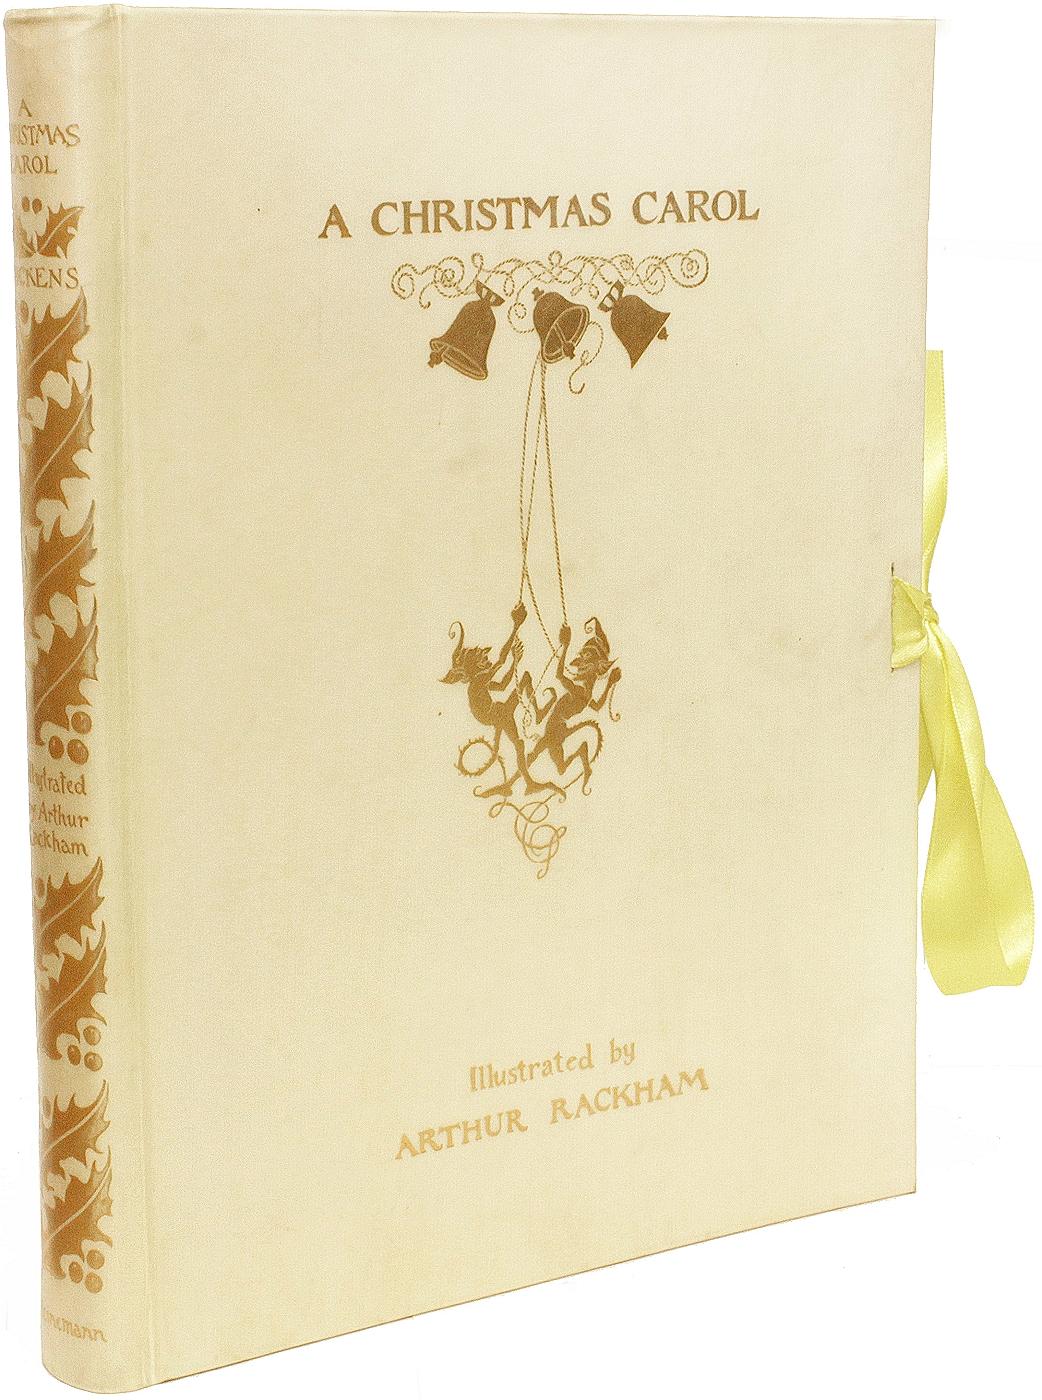 AUTHOR: DICKENS, Charles (Arthur Rackham)

TITLE: A Christmas Carol.

PUBLISHER: London: Heinemann, 1915.

DESCRIPTION: LIMITED SIGNED EDITION. 1 vol., 11-9/16